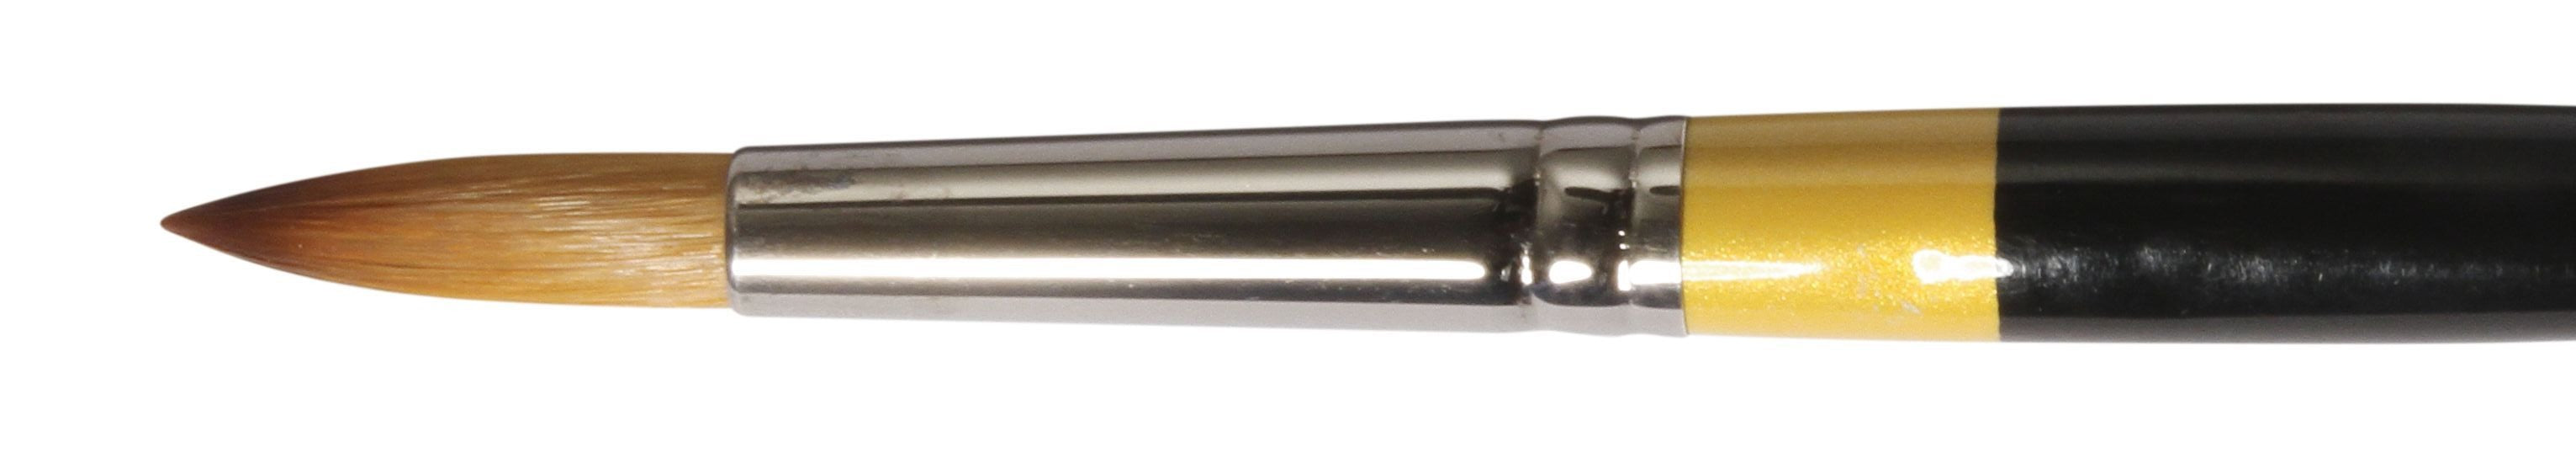 Daler Rowney System 3 Short Handle Round Brush SY85 Size 12 Shape: Round Hair Width: 7.5 mm Hair Length: 29 mm Handle Length: Short